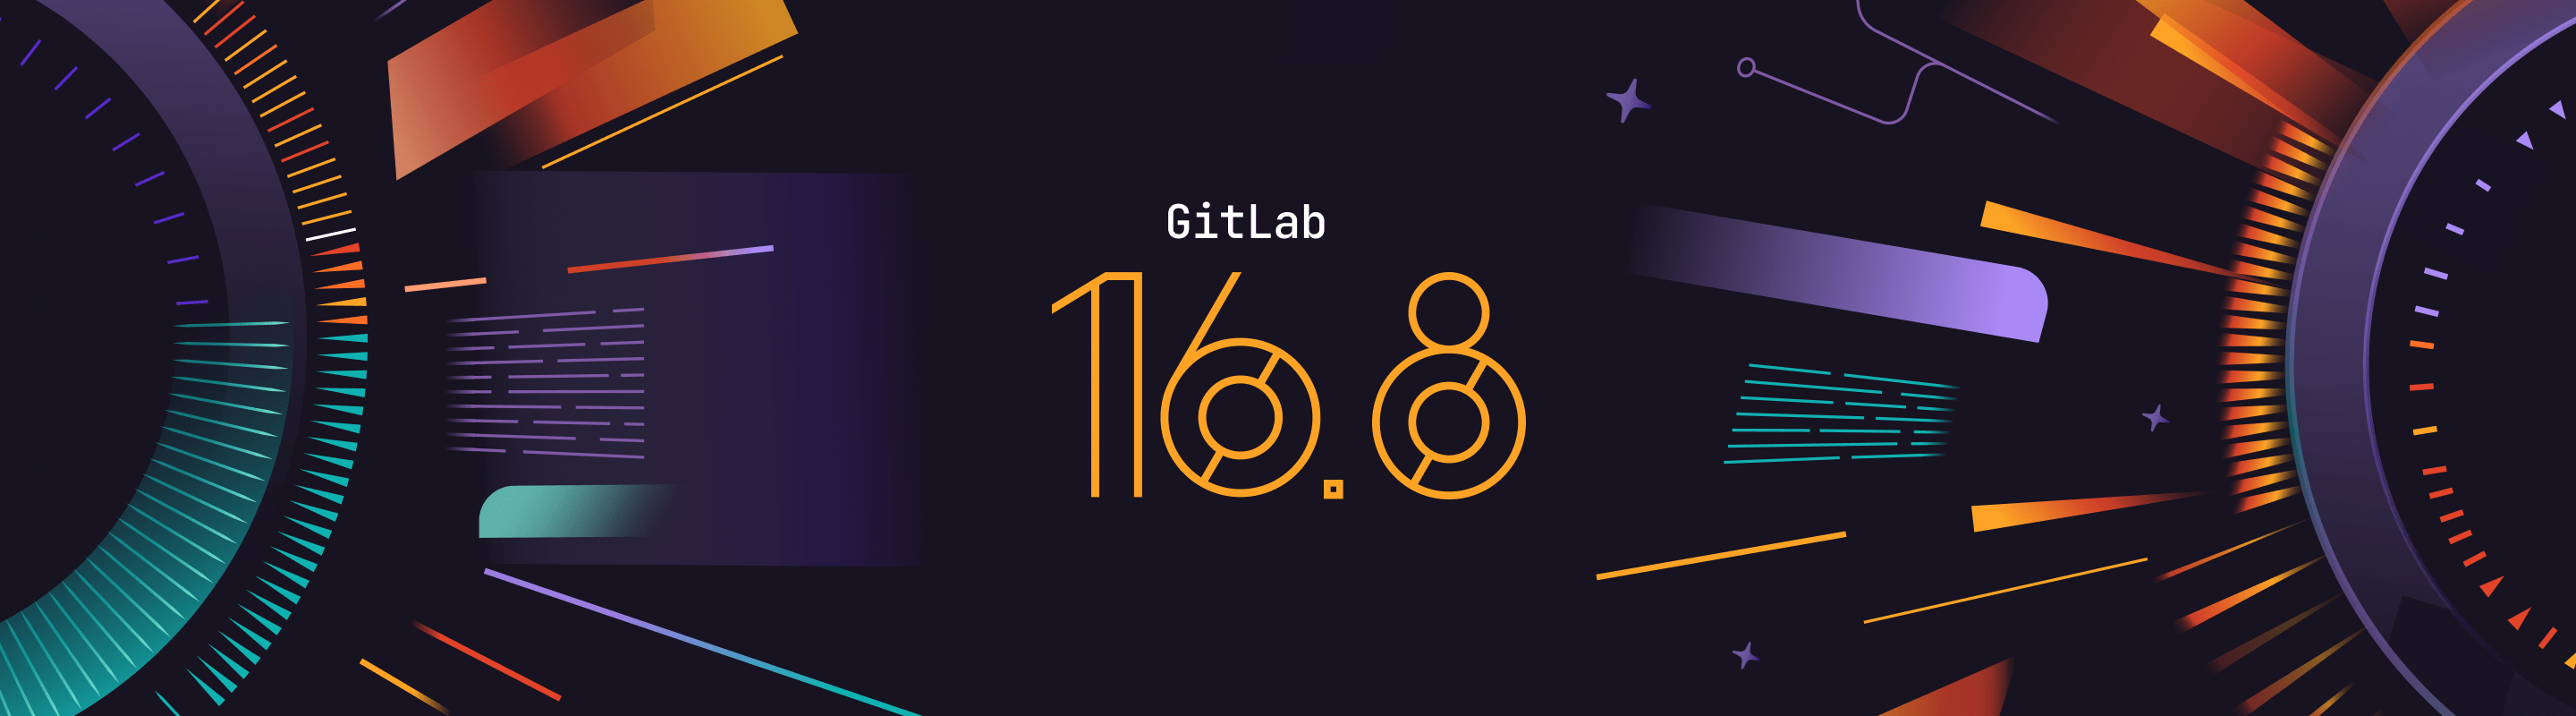 GitLab 16.8